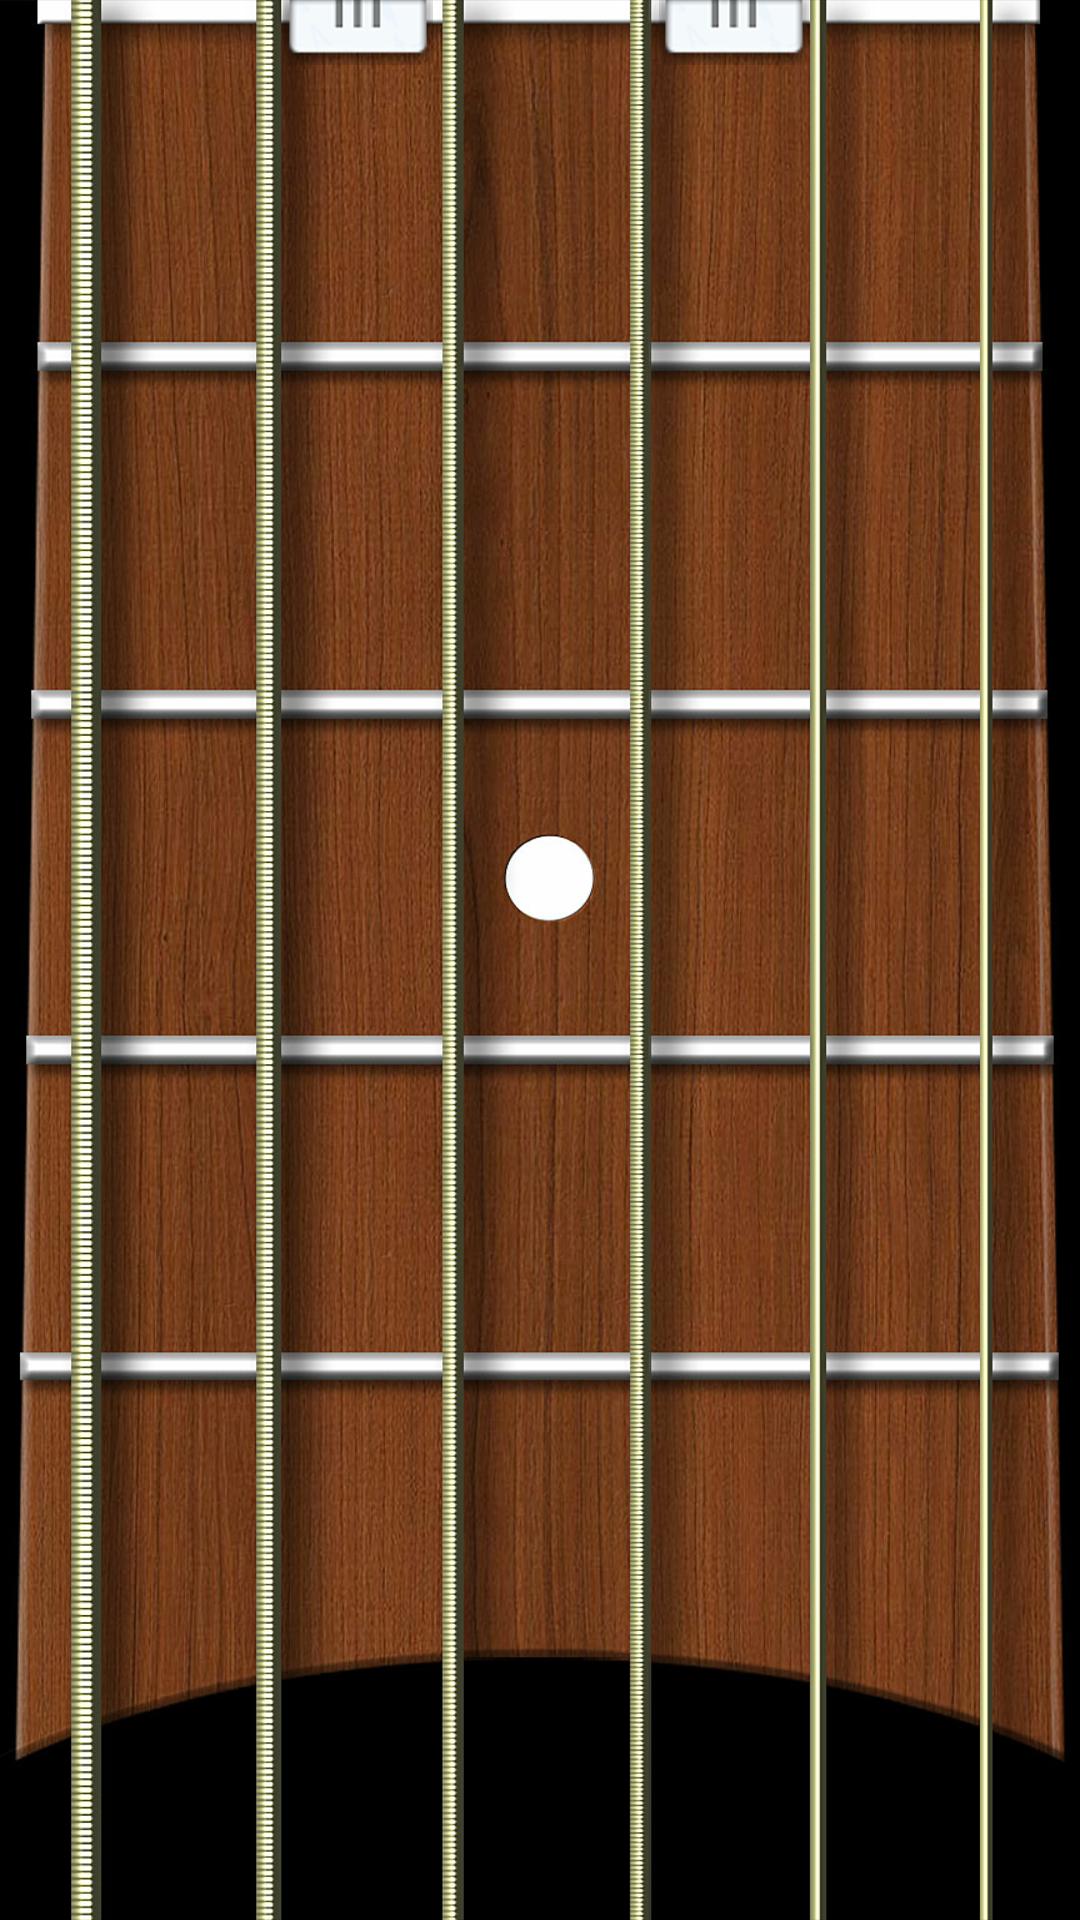 My Guitar Solo & Chords 2.4 Screenshot 9